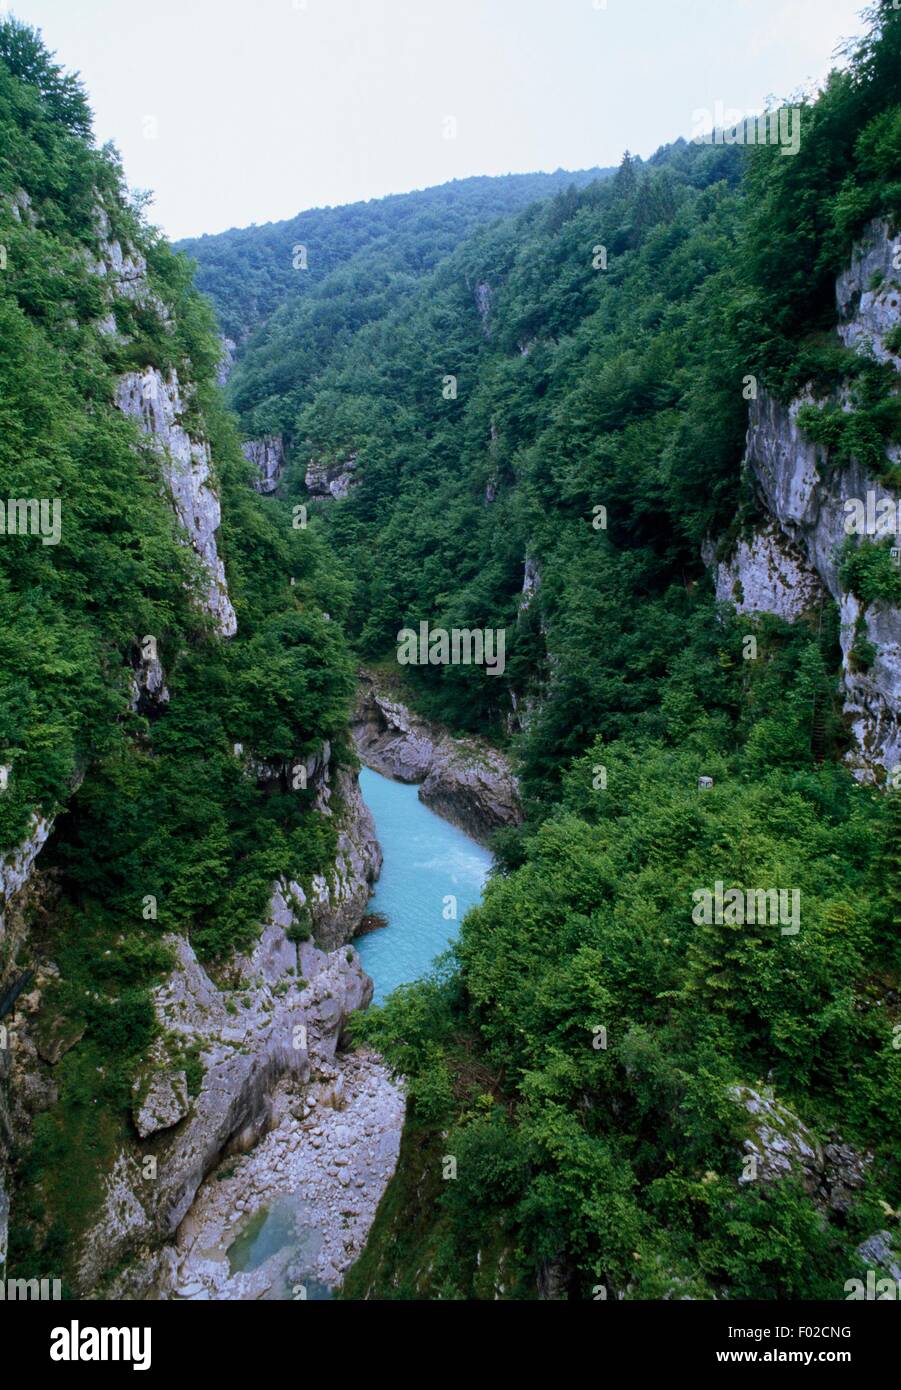 La Cellina río que fluye a través de una garganta antes de desembocar en el lago Barcis, Friuli-Venezia Giulia, Italia. Foto de stock